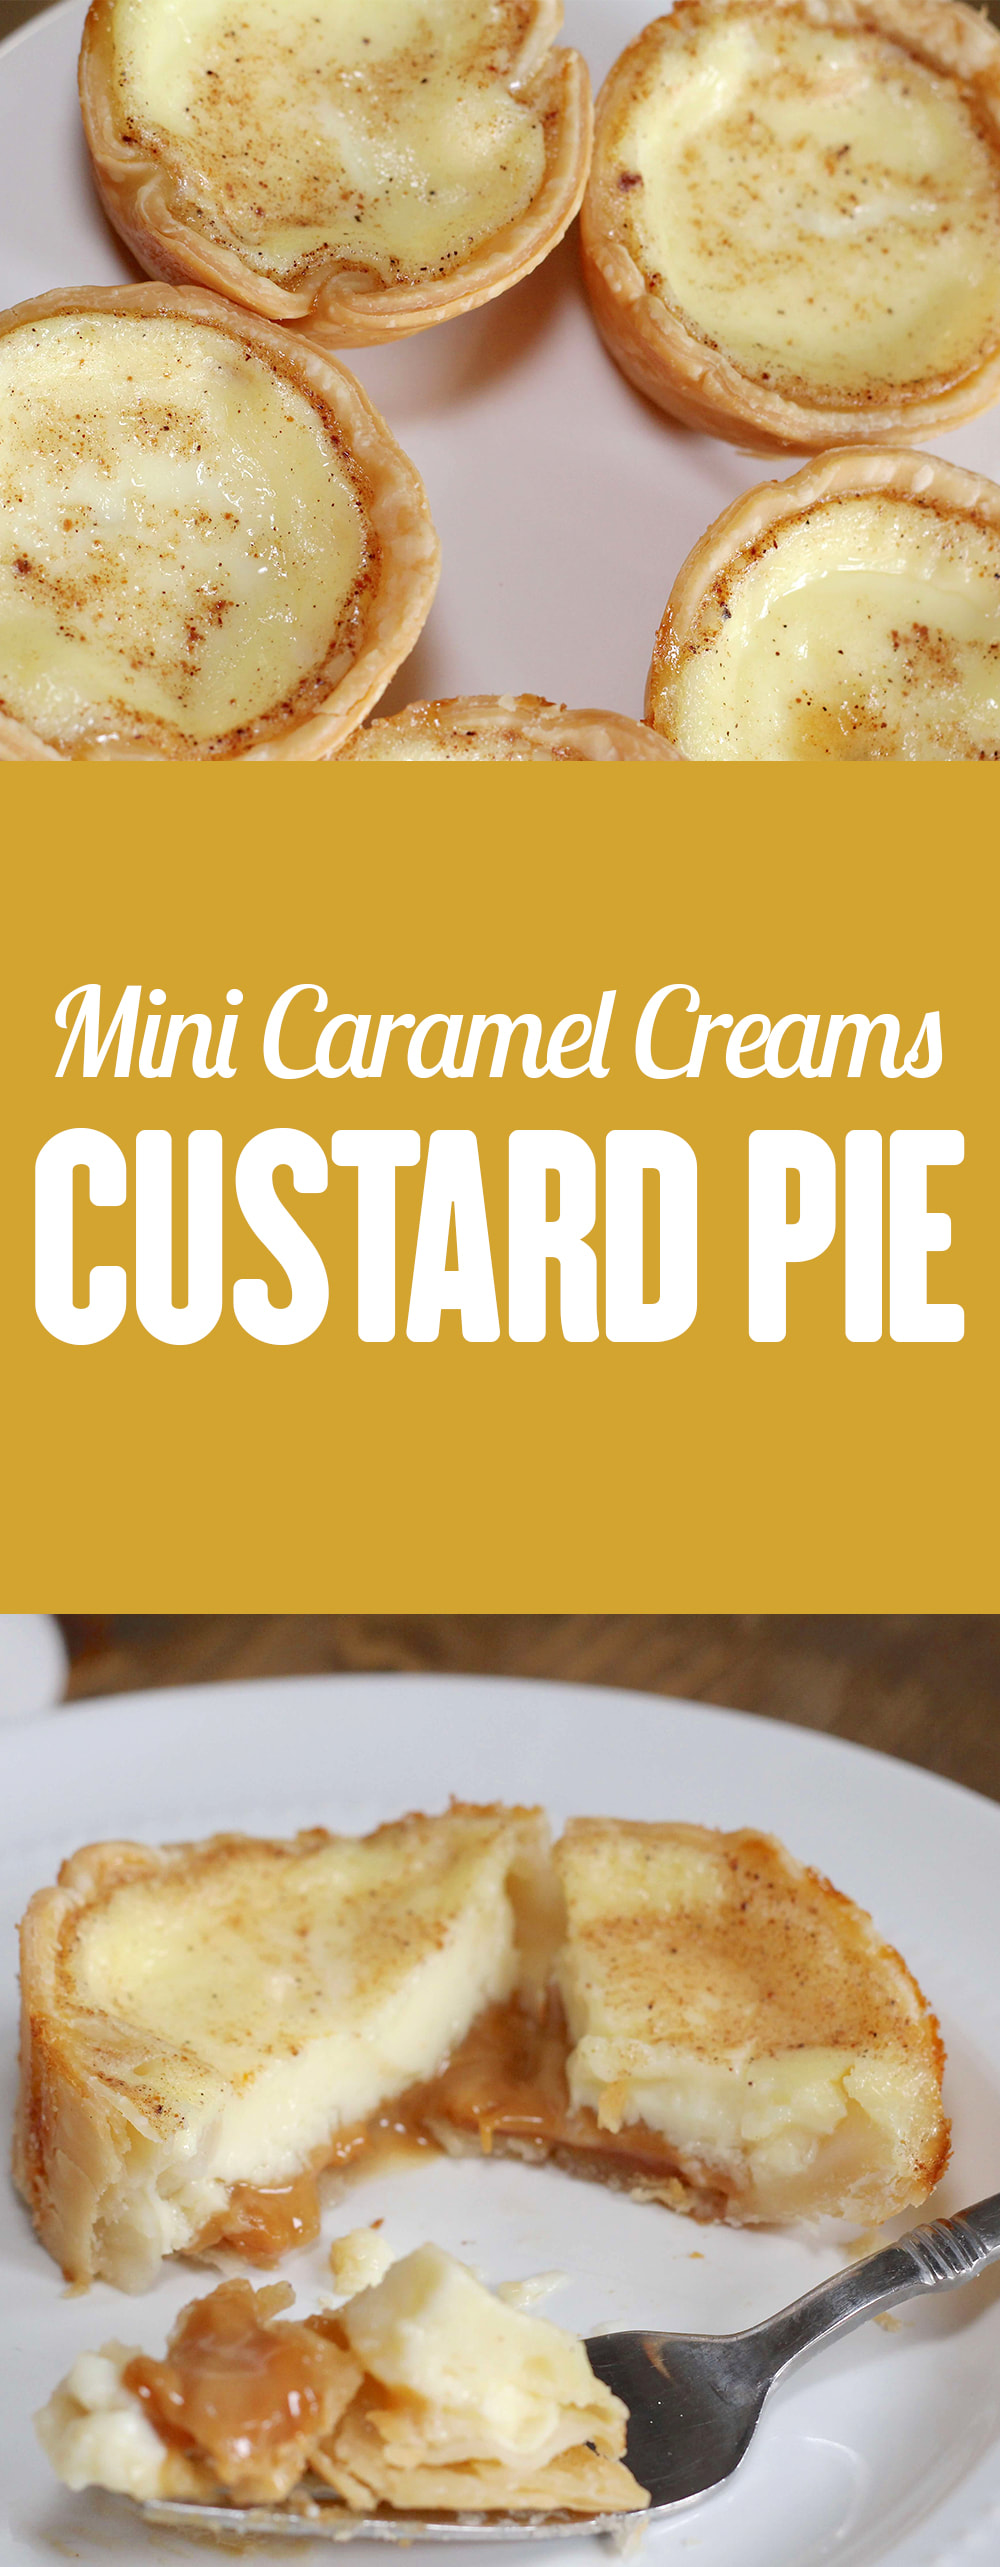 mini-caramel-creams-custard-pie-pinterest